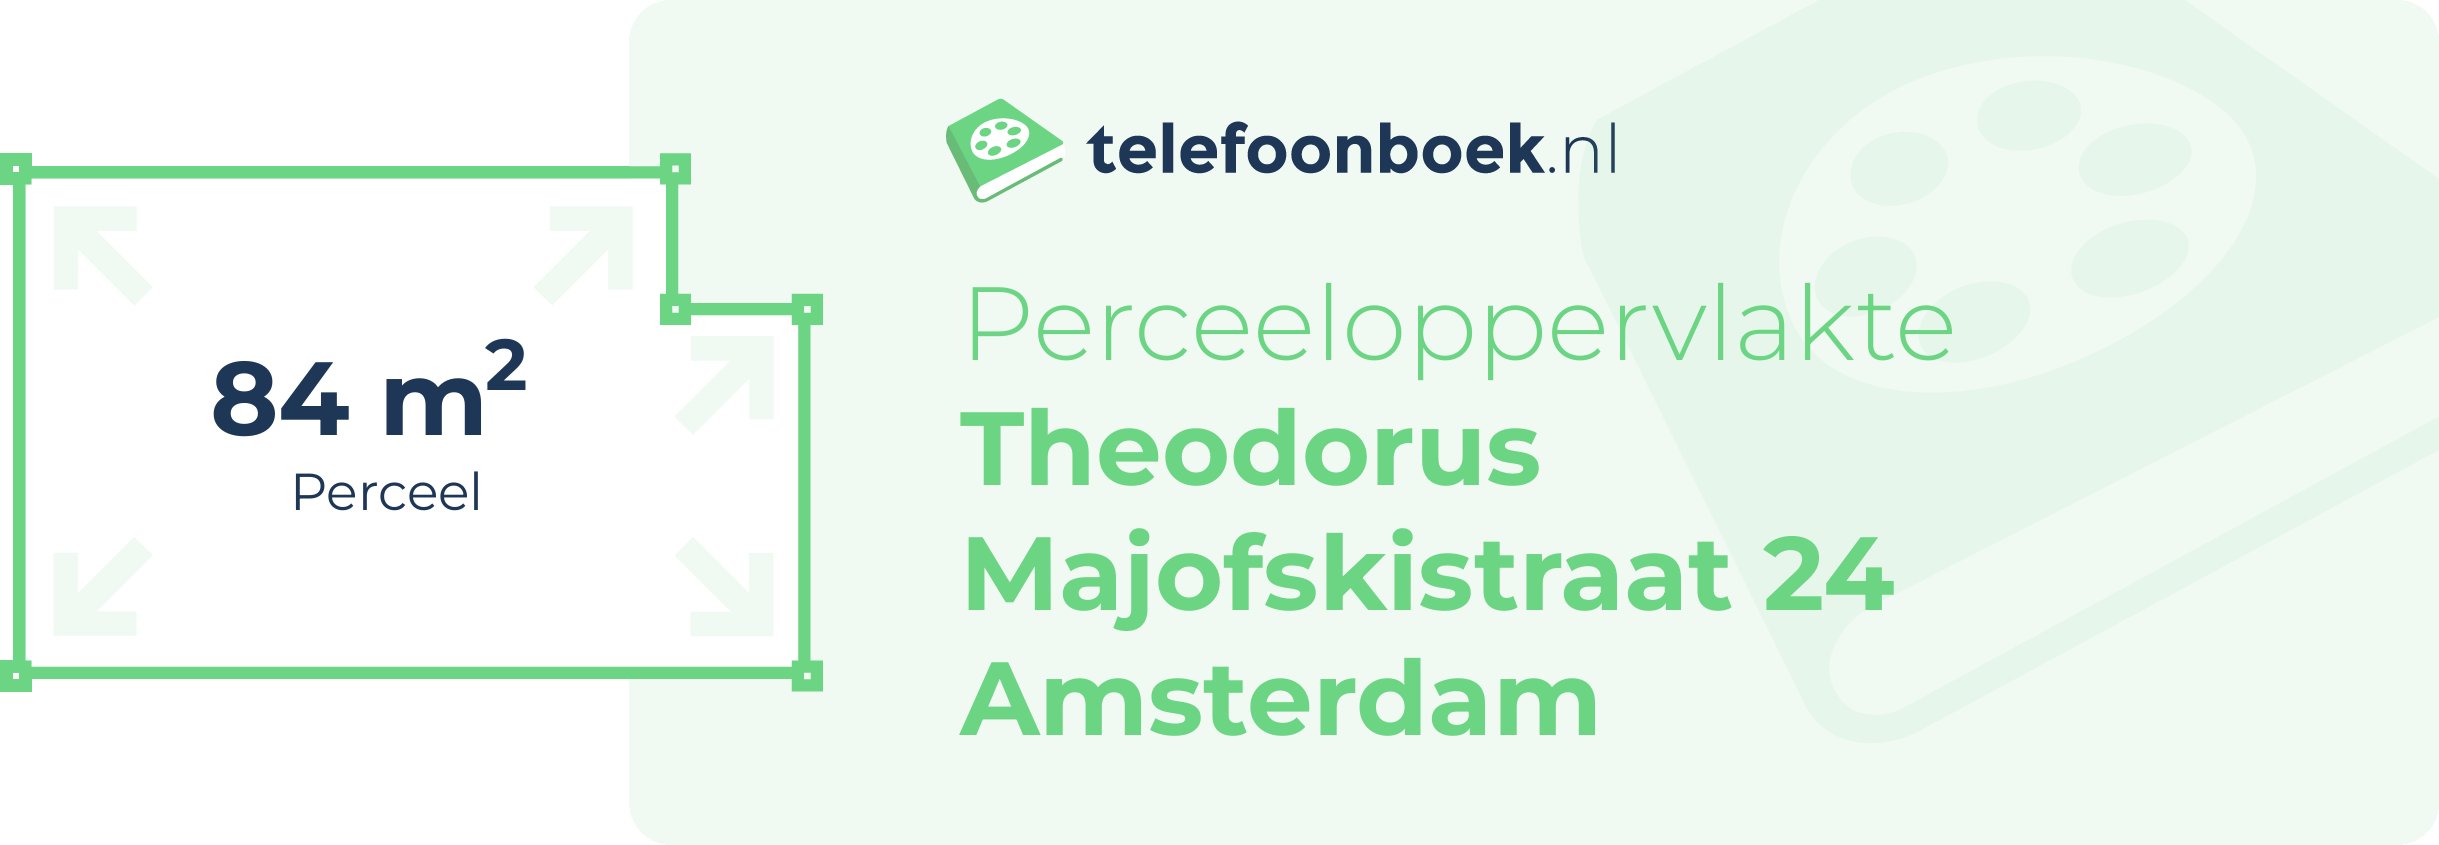 Perceeloppervlakte Theodorus Majofskistraat 24 Amsterdam